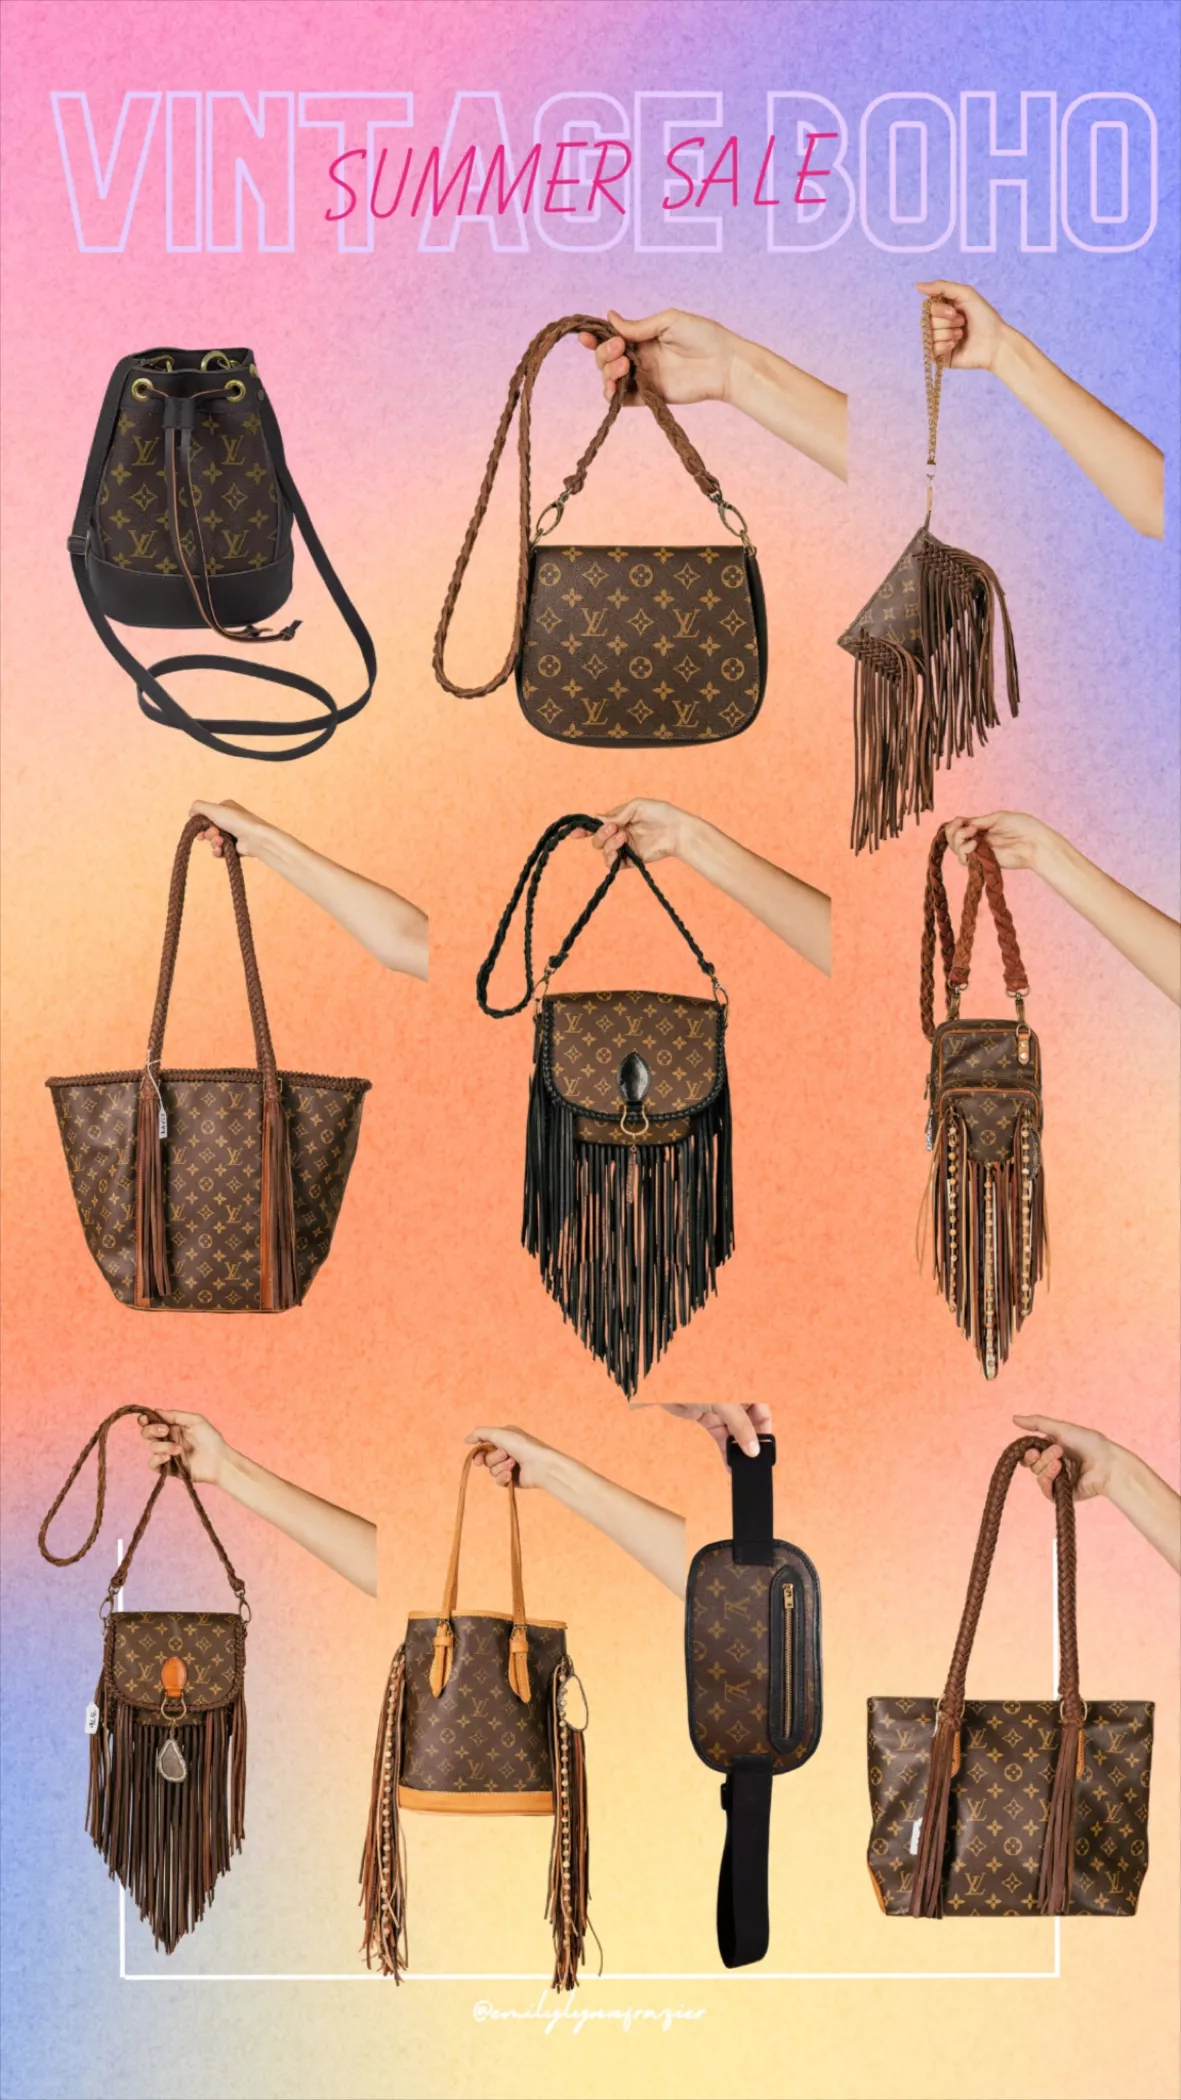 Summer Flash Sale Bag #00001 curated on LTK